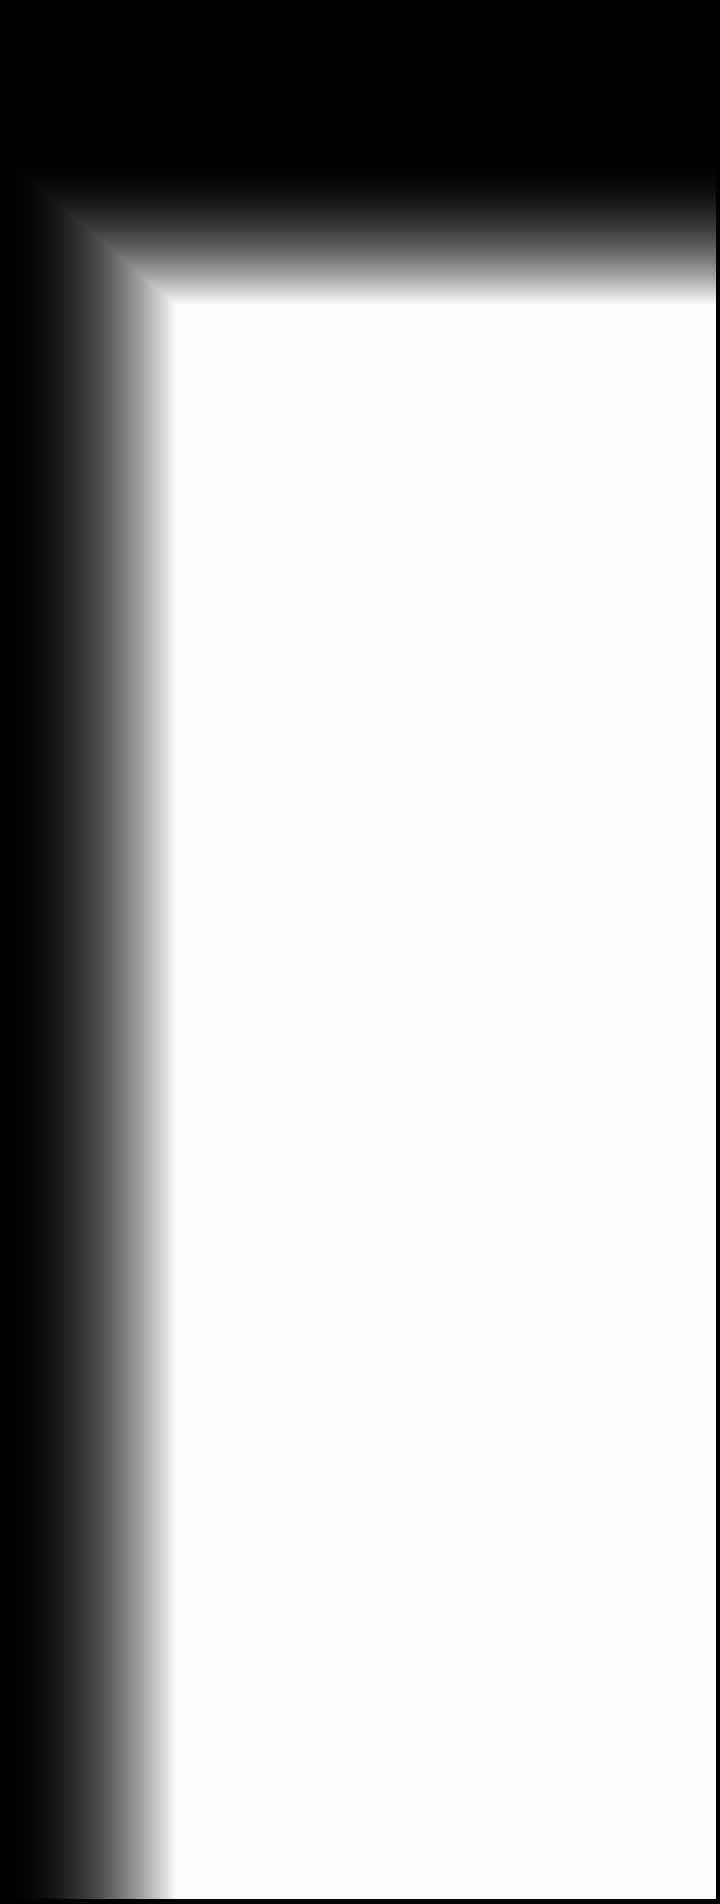 7060 ORIGINAL SEA MASTER (05 MØK MARINE) M 19